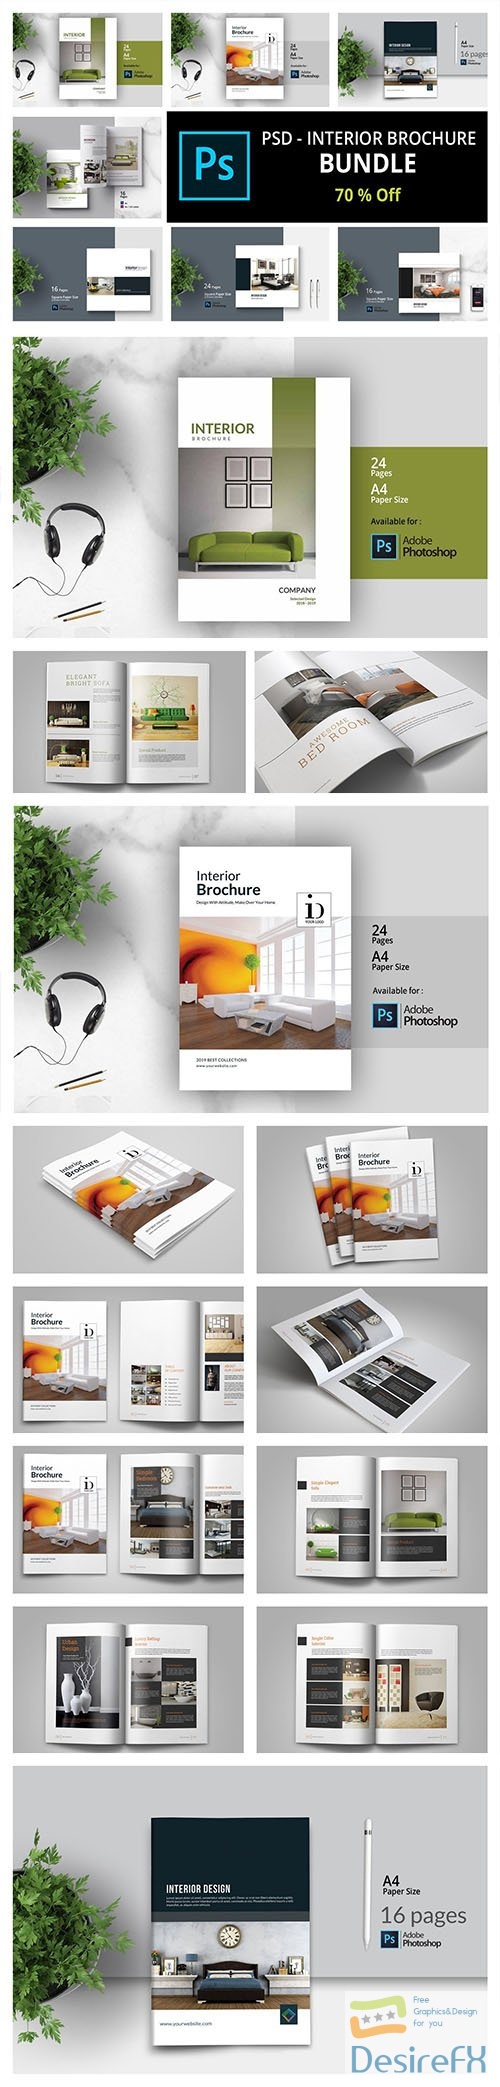 CreativeMarket - PSD Interior Brochure BUNDLE 4617268